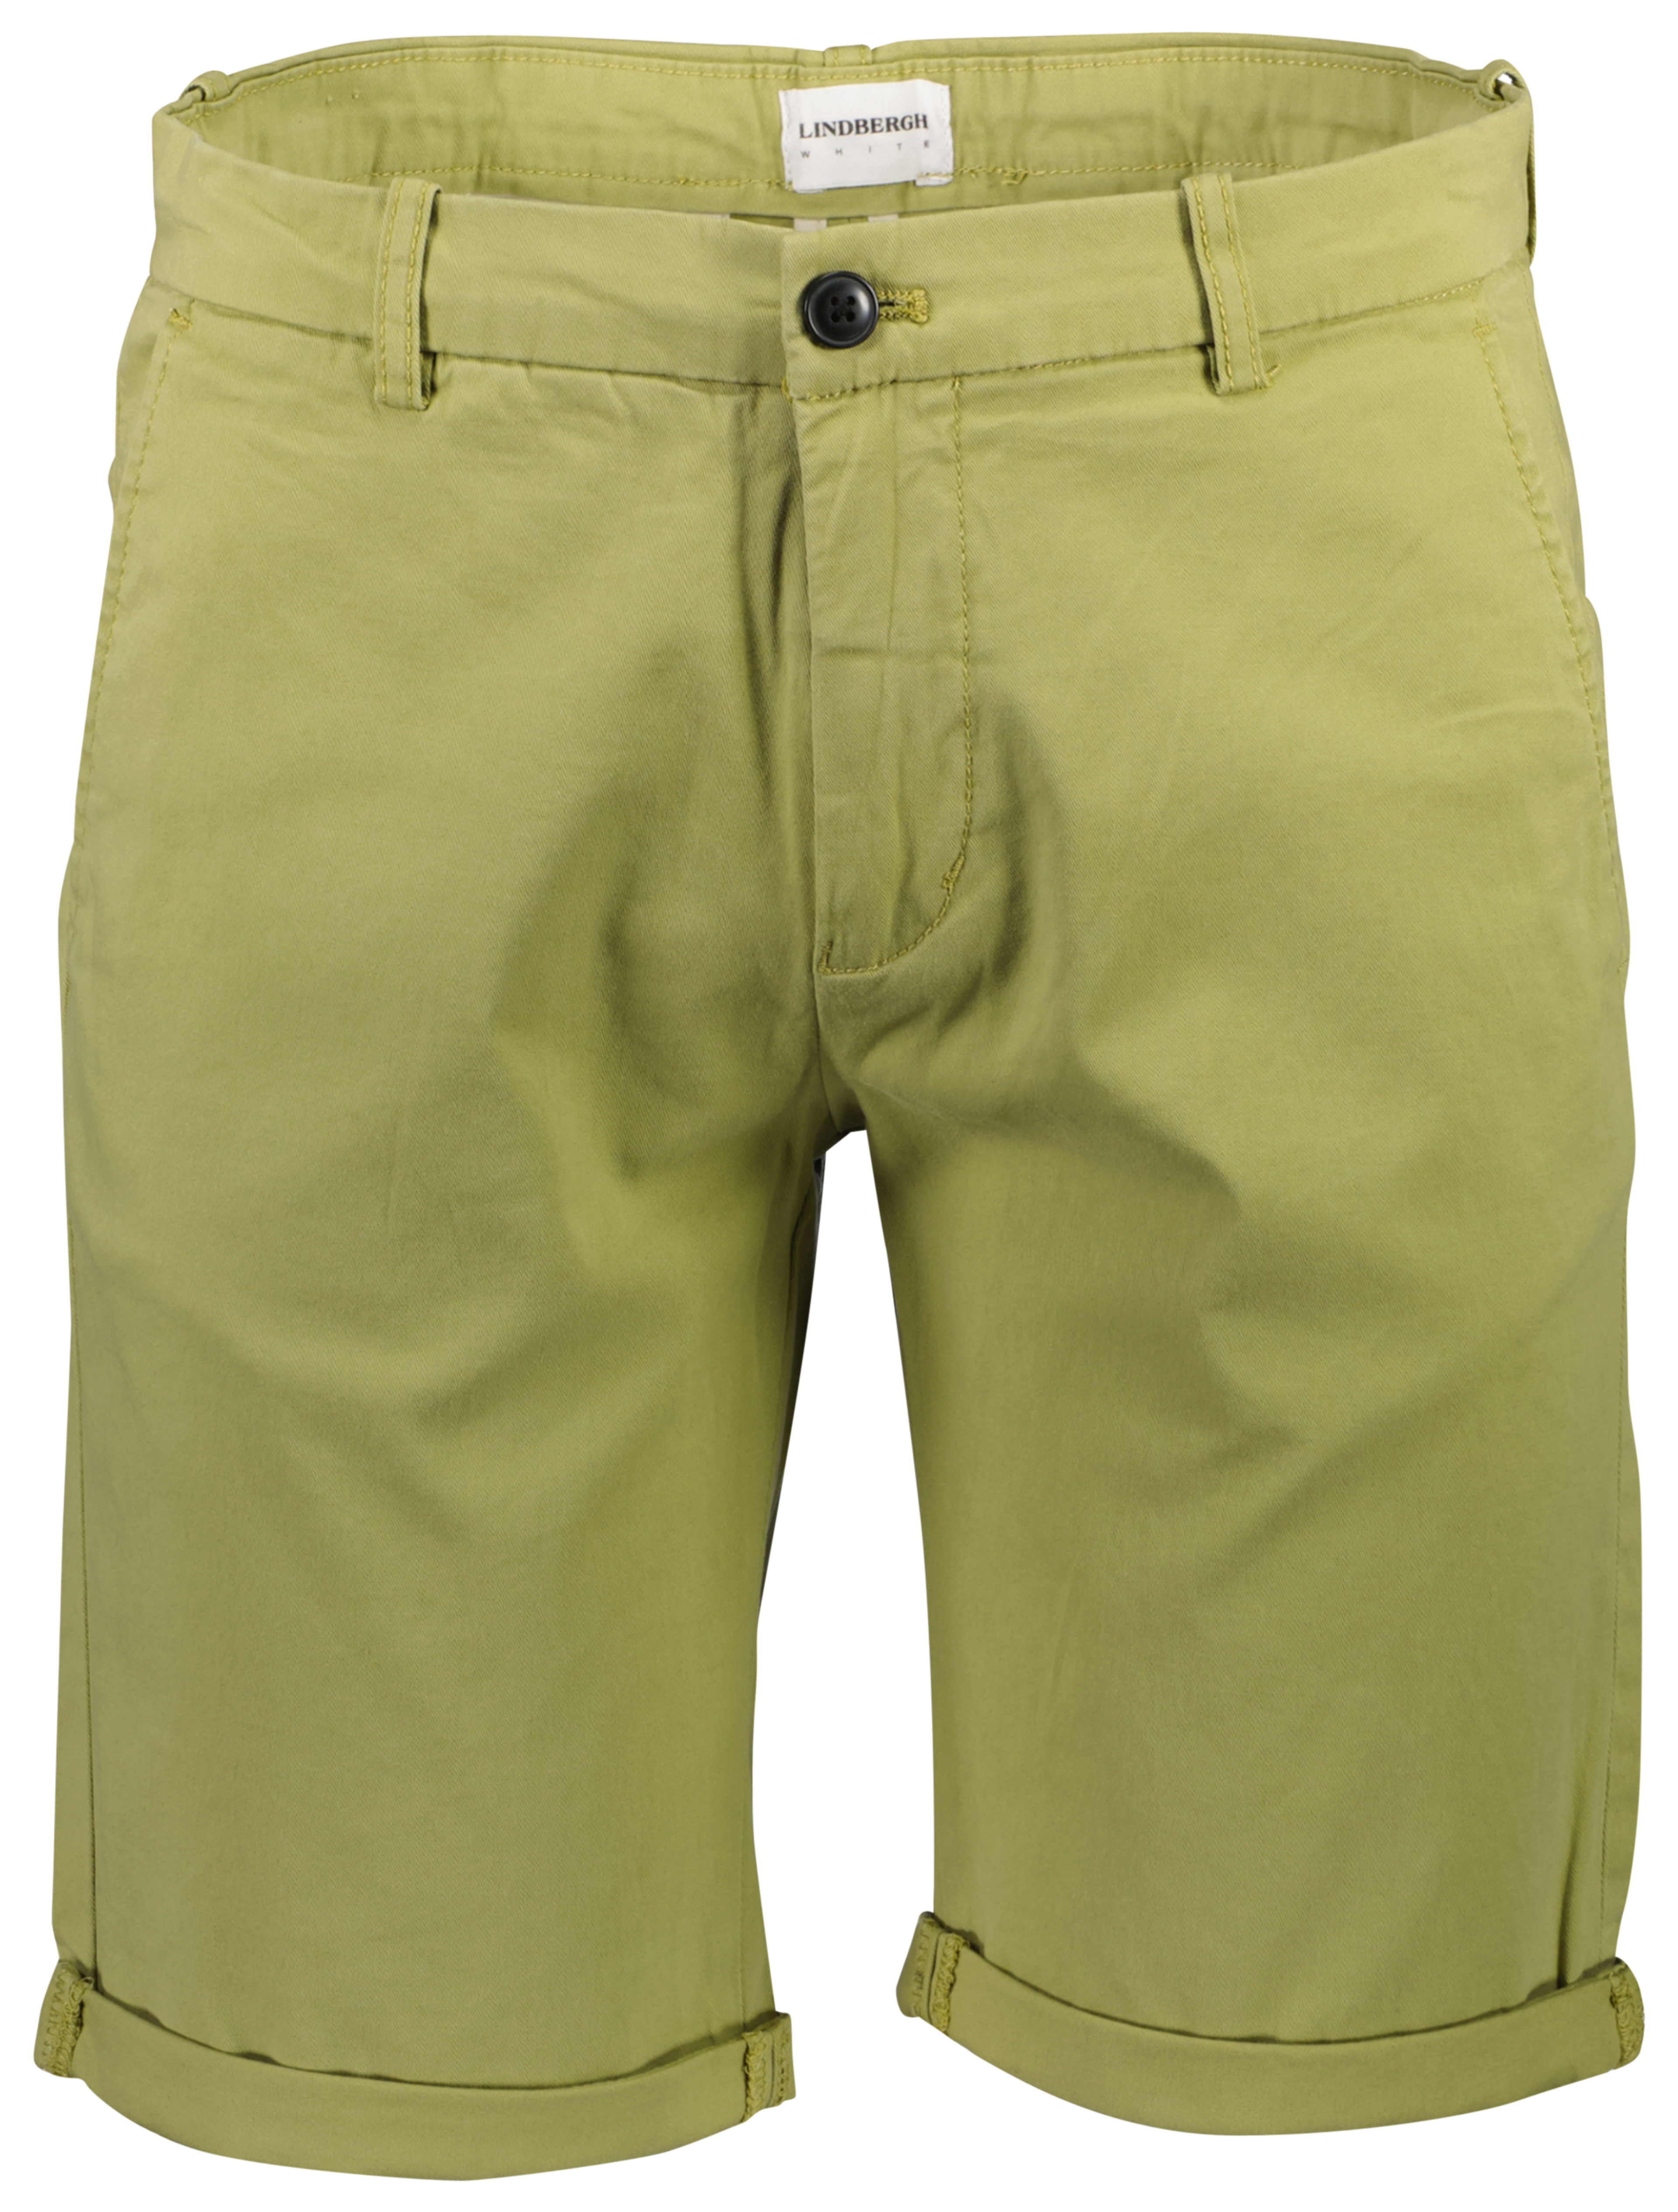 Lindbergh Chino shorts green / khaki